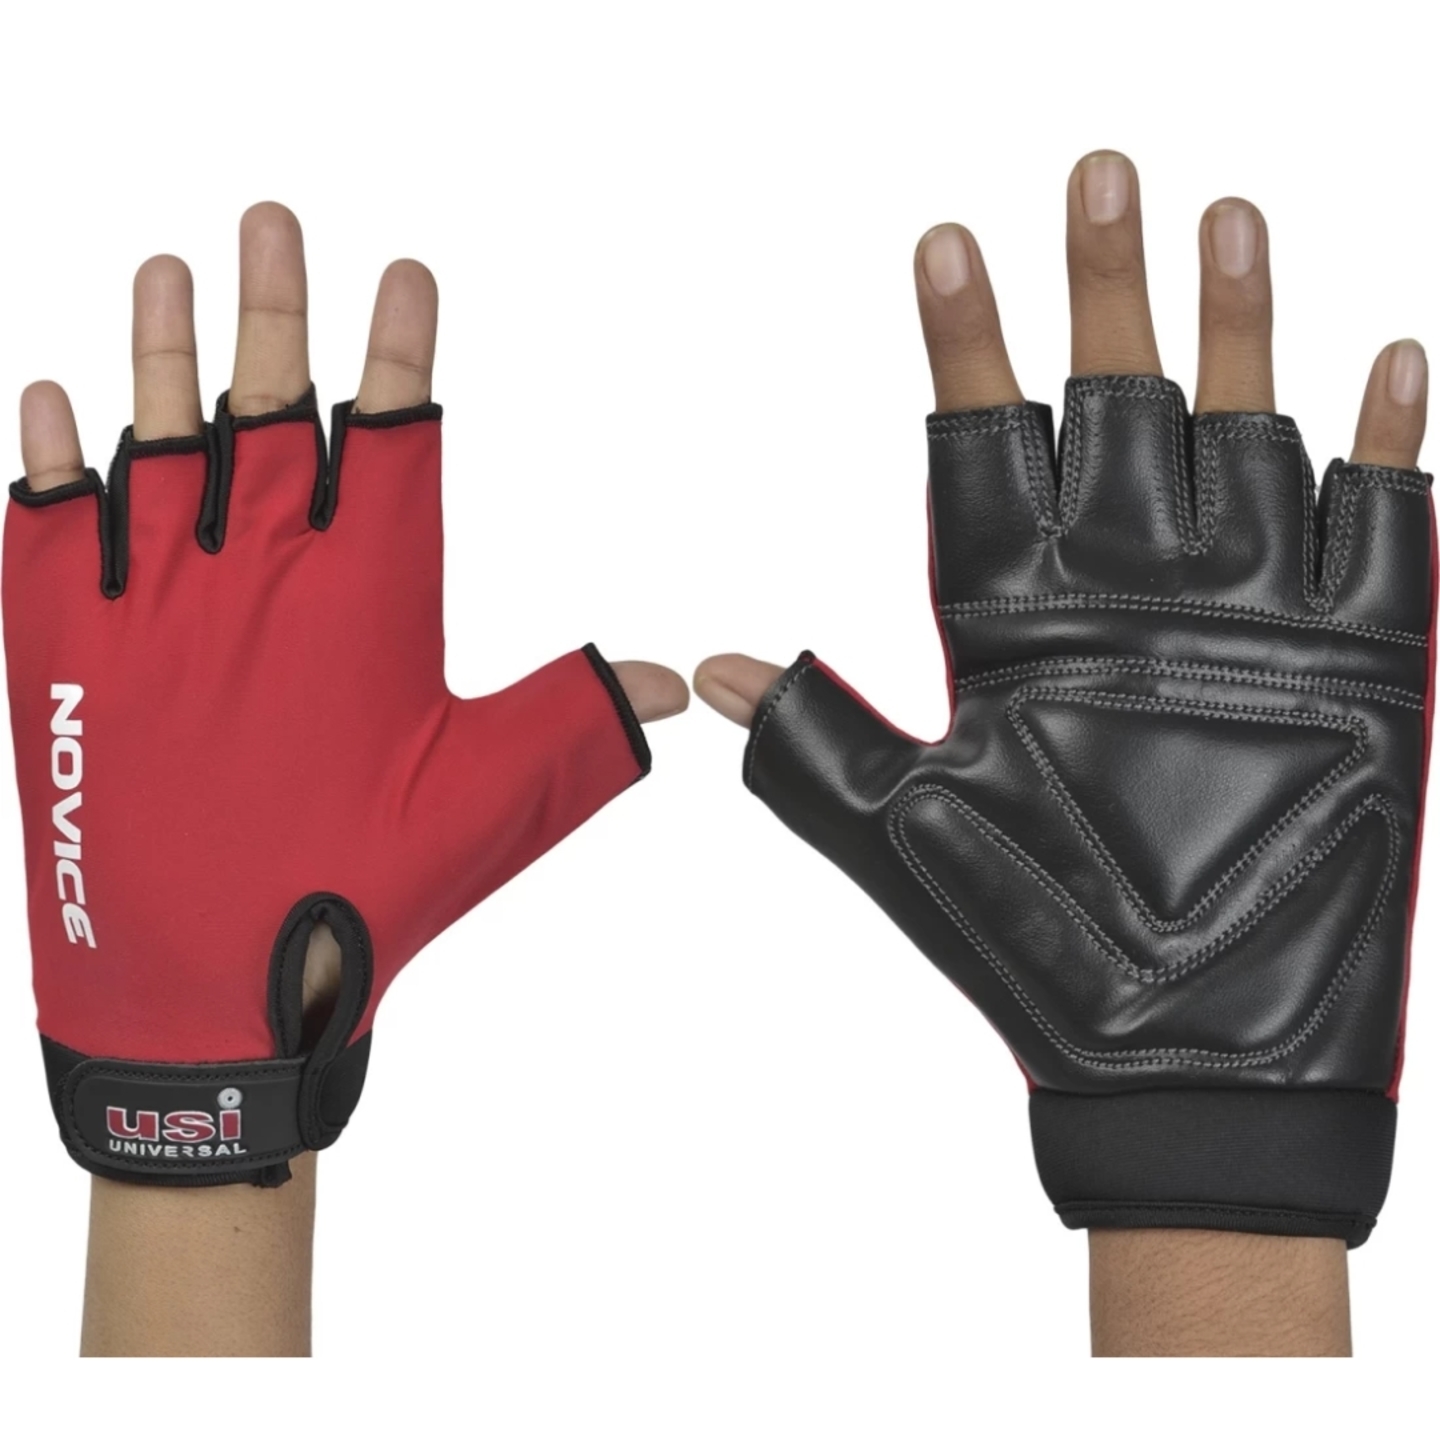 USI Novice Fitness Gym Gloves